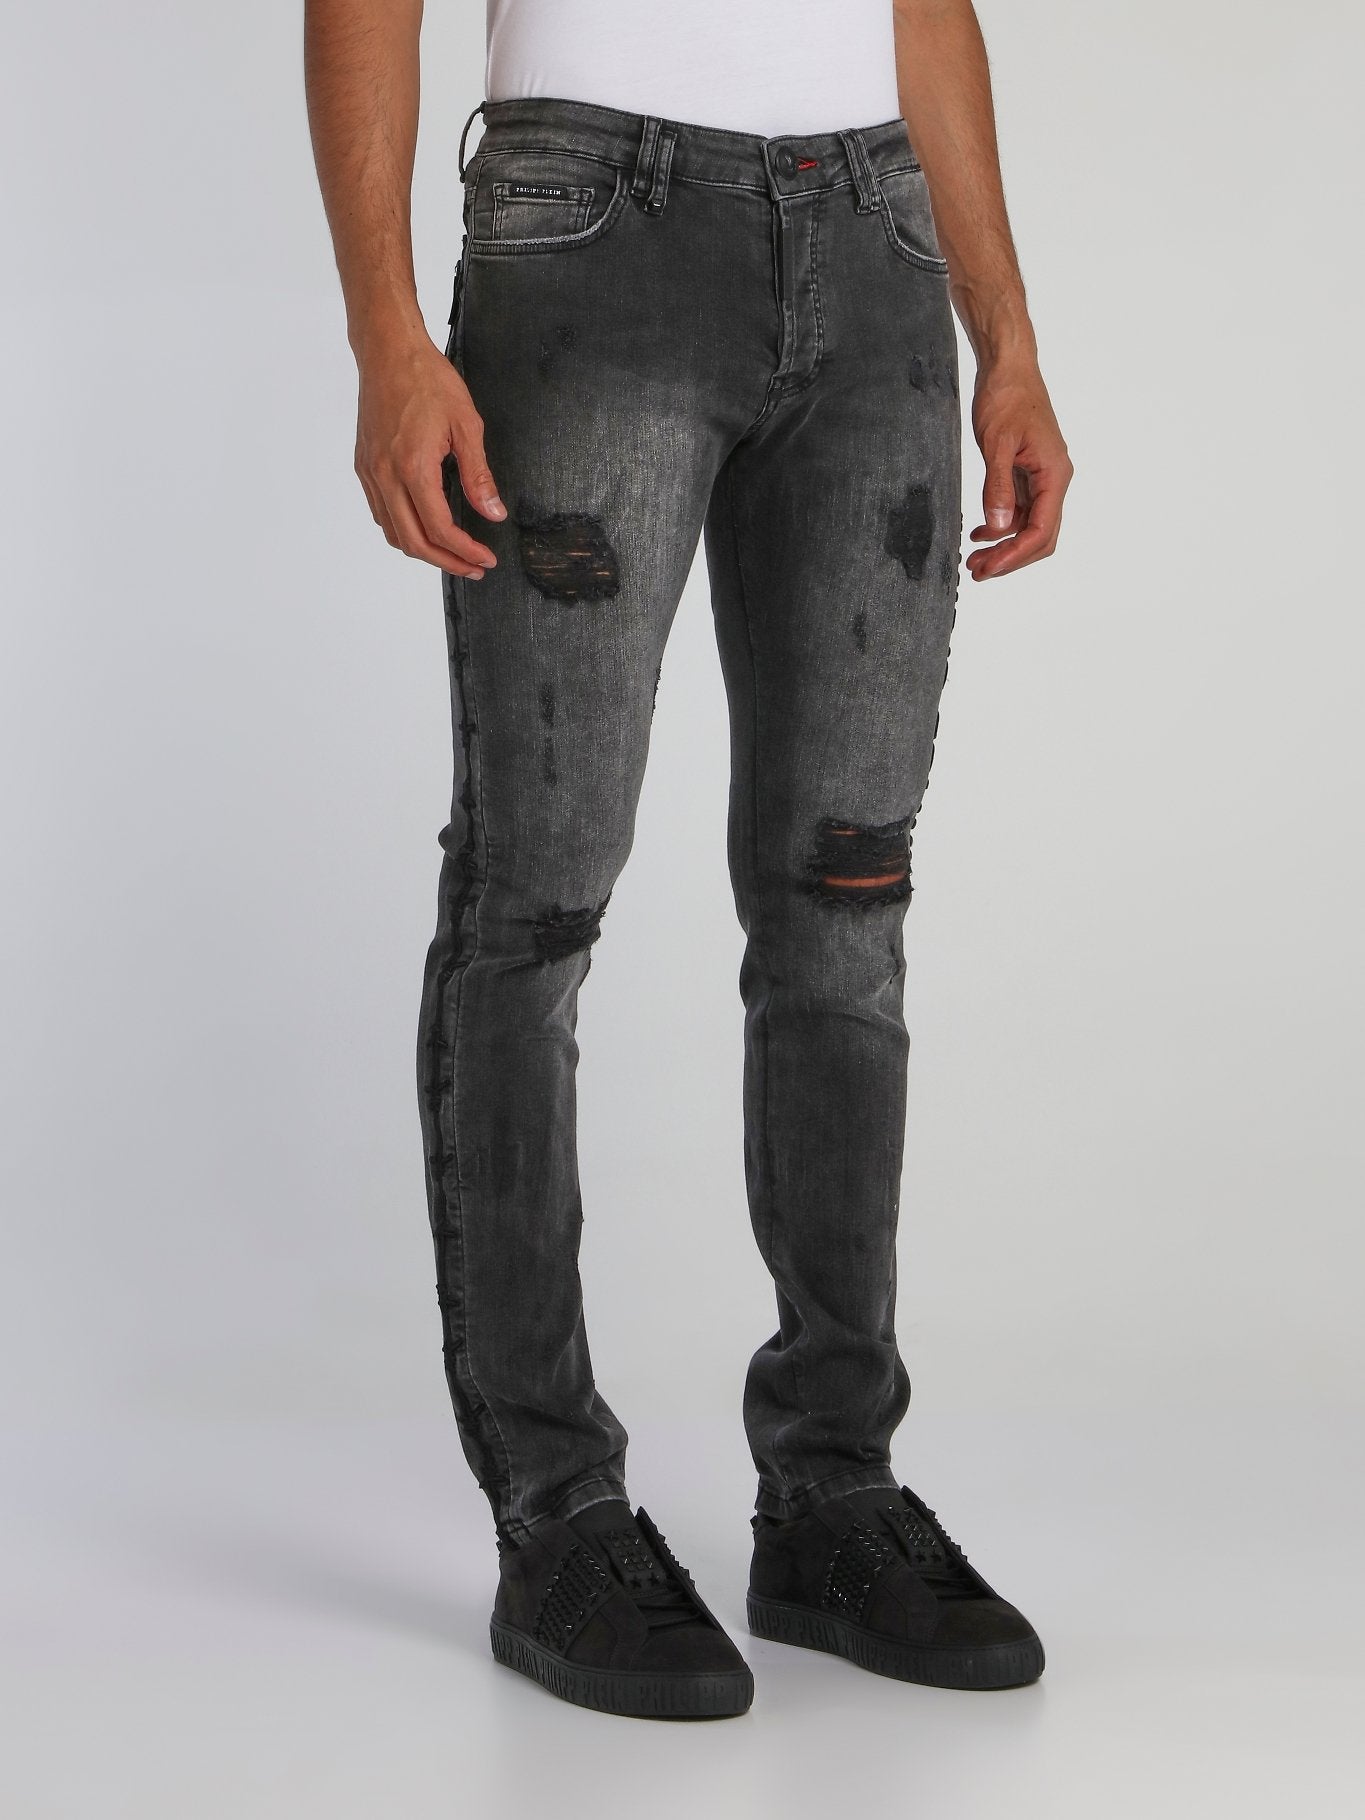 Grey Tattered Skinny Jeans